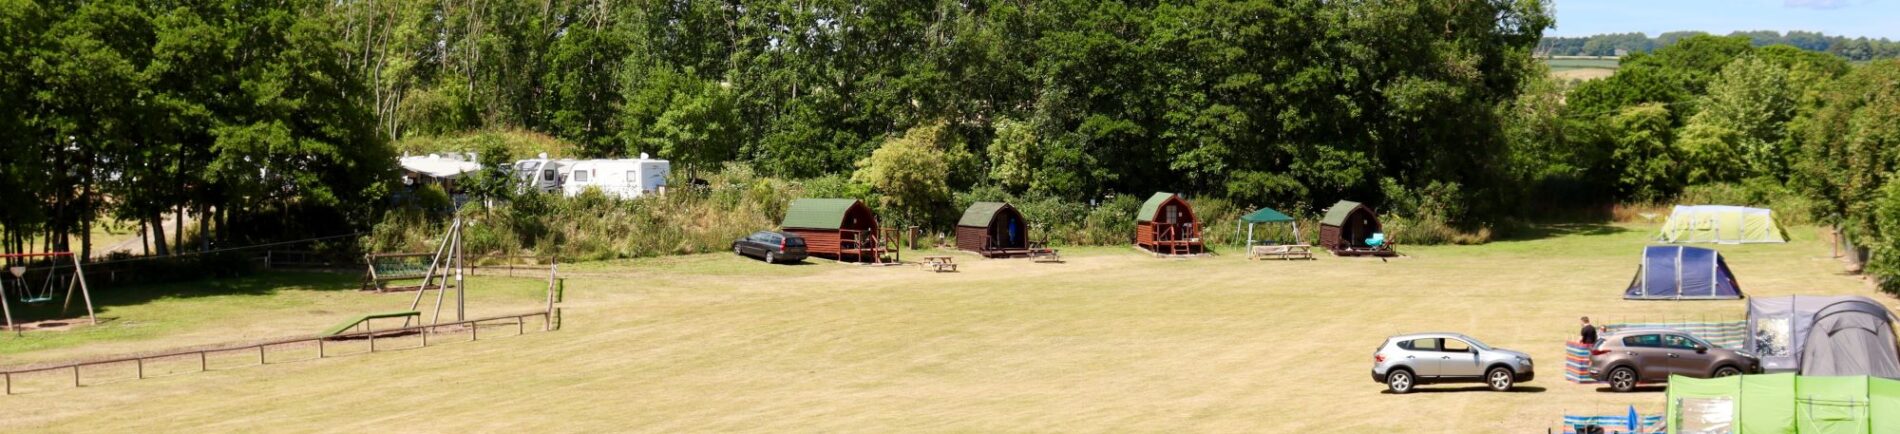 Campsite with facilities near Scarborough